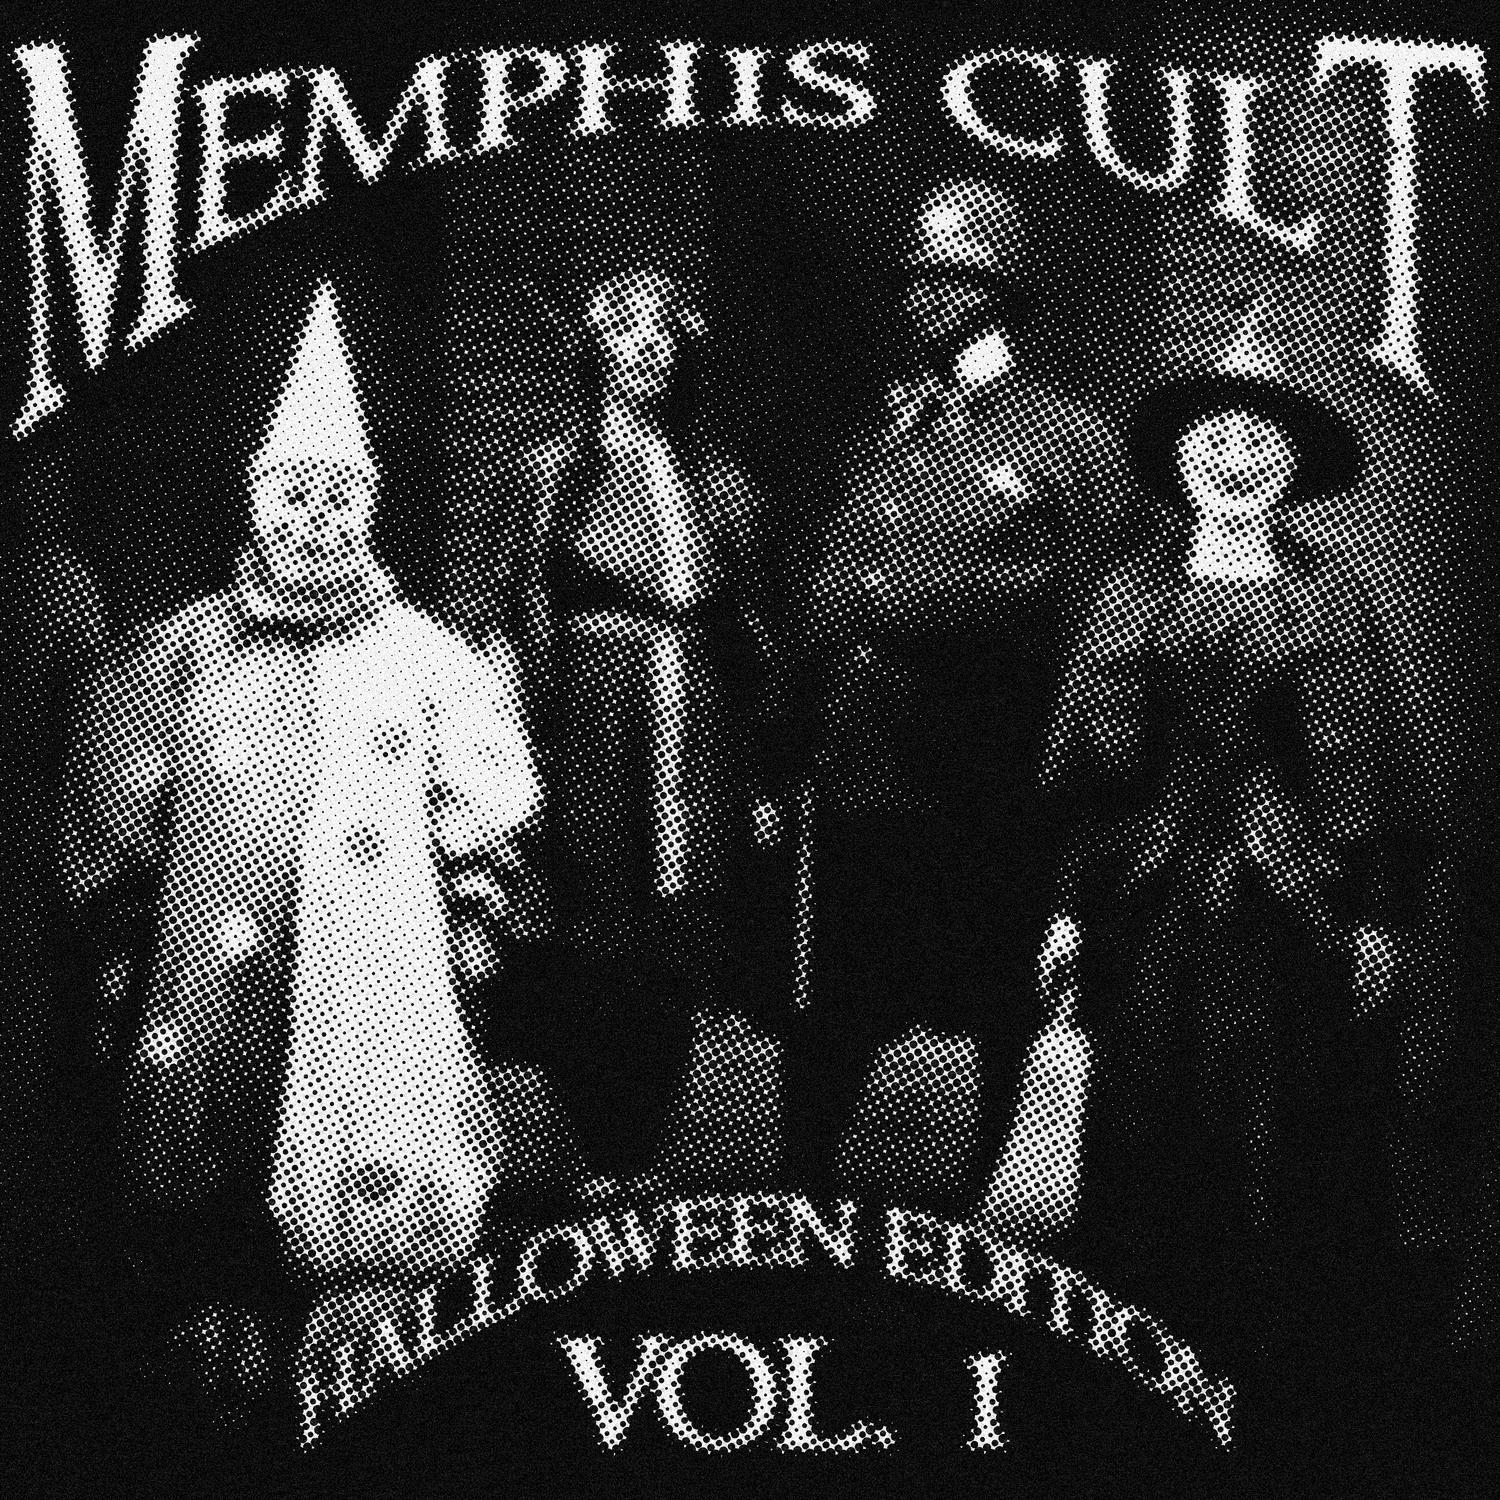 Memphis Cult - **** the Law